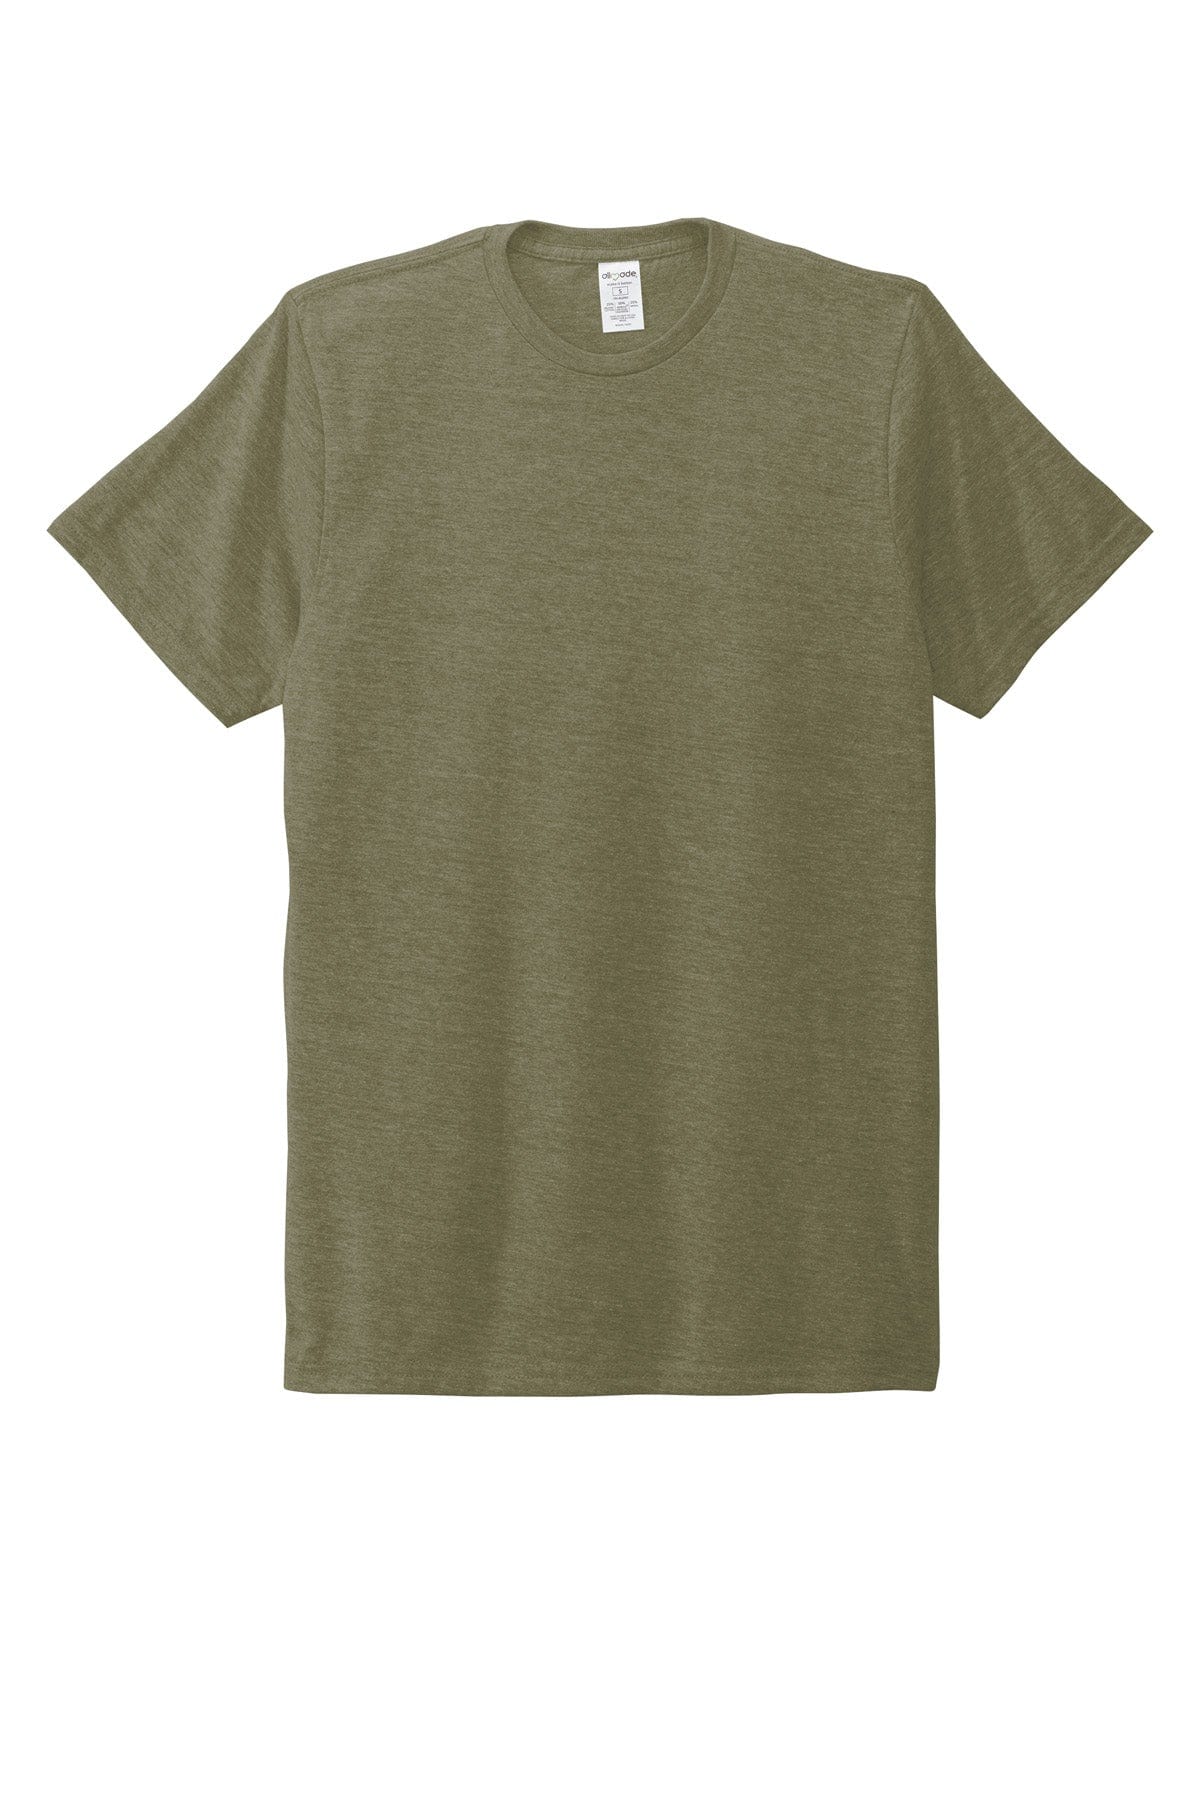 XS / Olive You Green Custom Allmade Unisex Tri-Blend T-Shirt